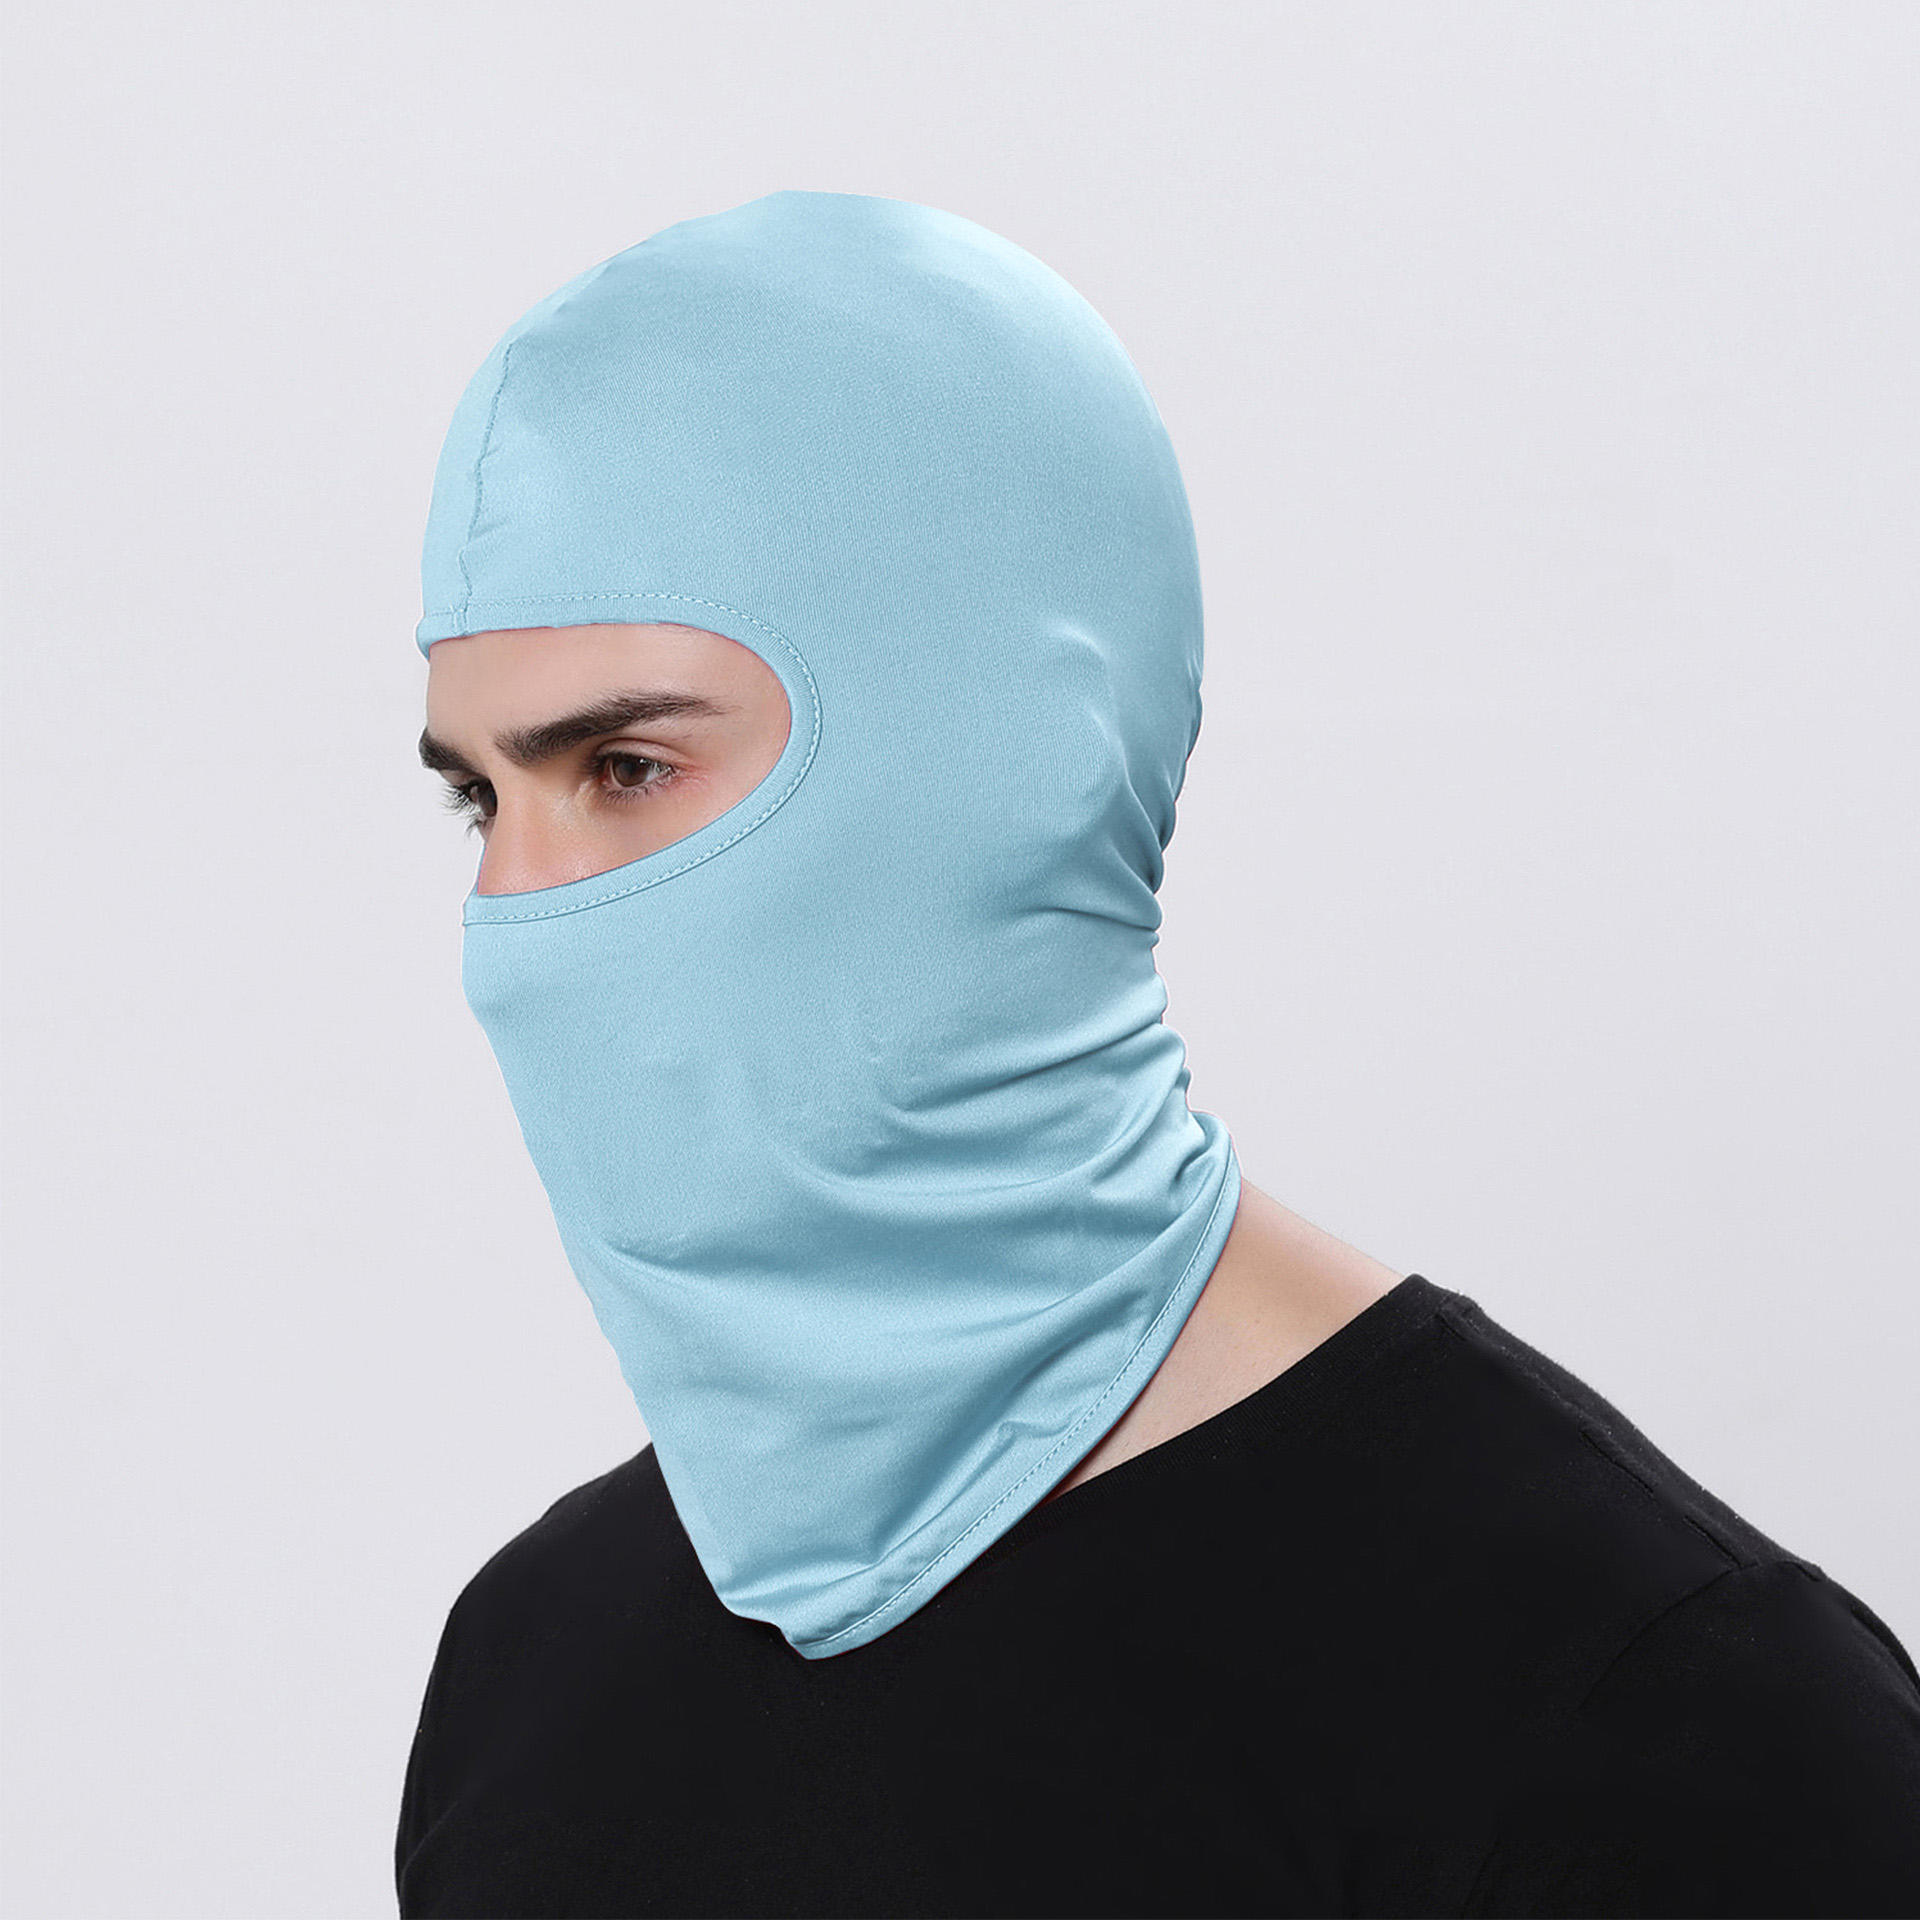 Ski Mask for Men Women, Balaclava Face Mask Men, Pooh Shiesty Mask, Full  Face Mask UV Protection Outdoor Sports